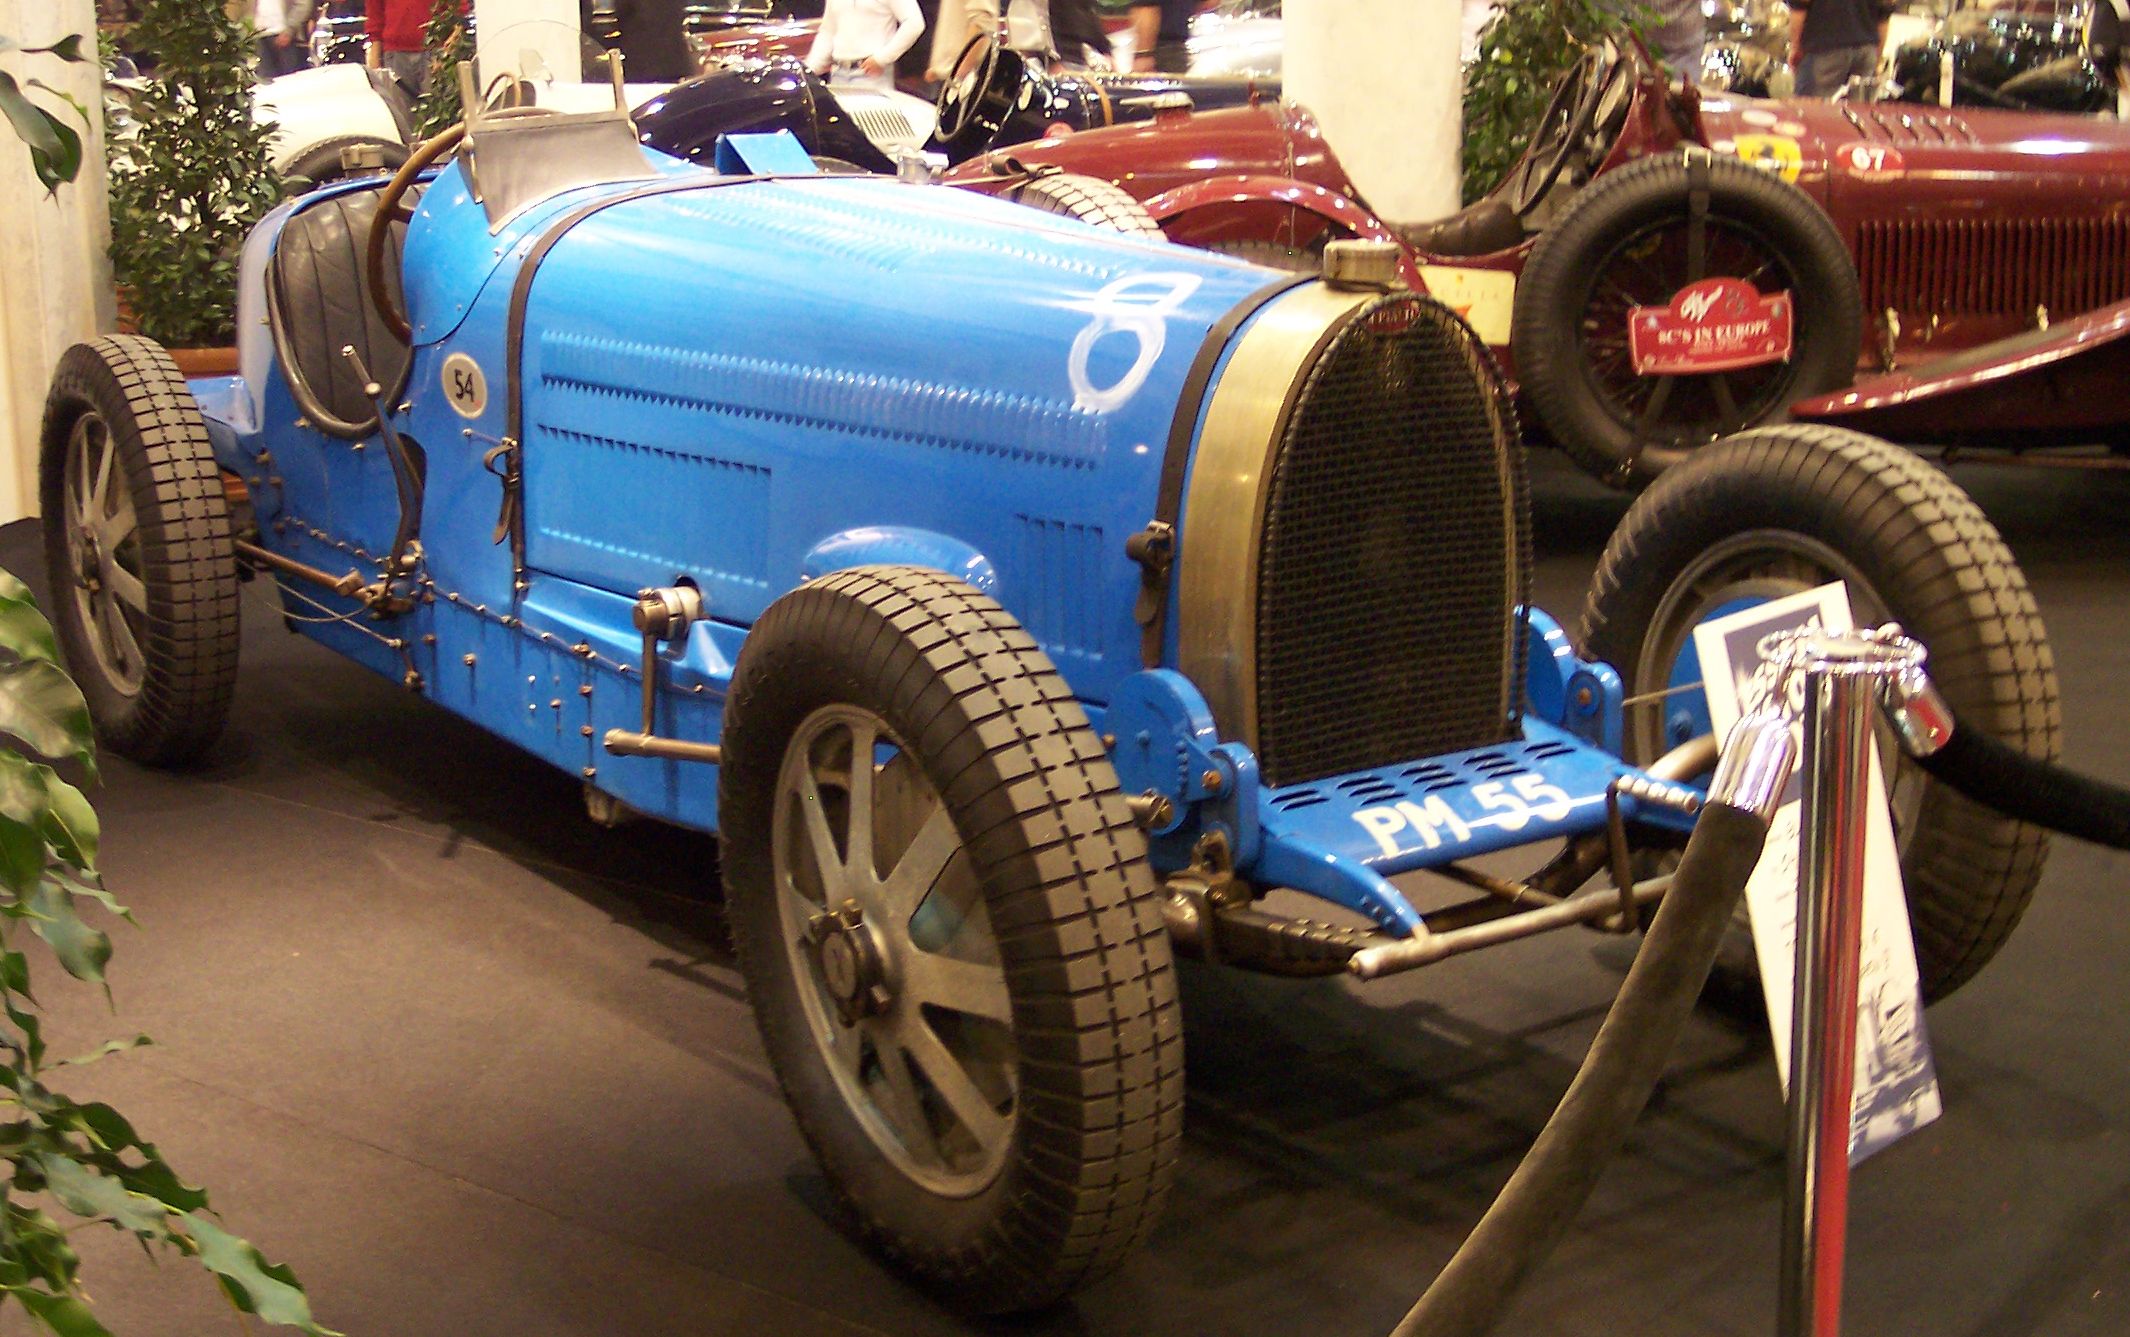 Bugatti Type 54